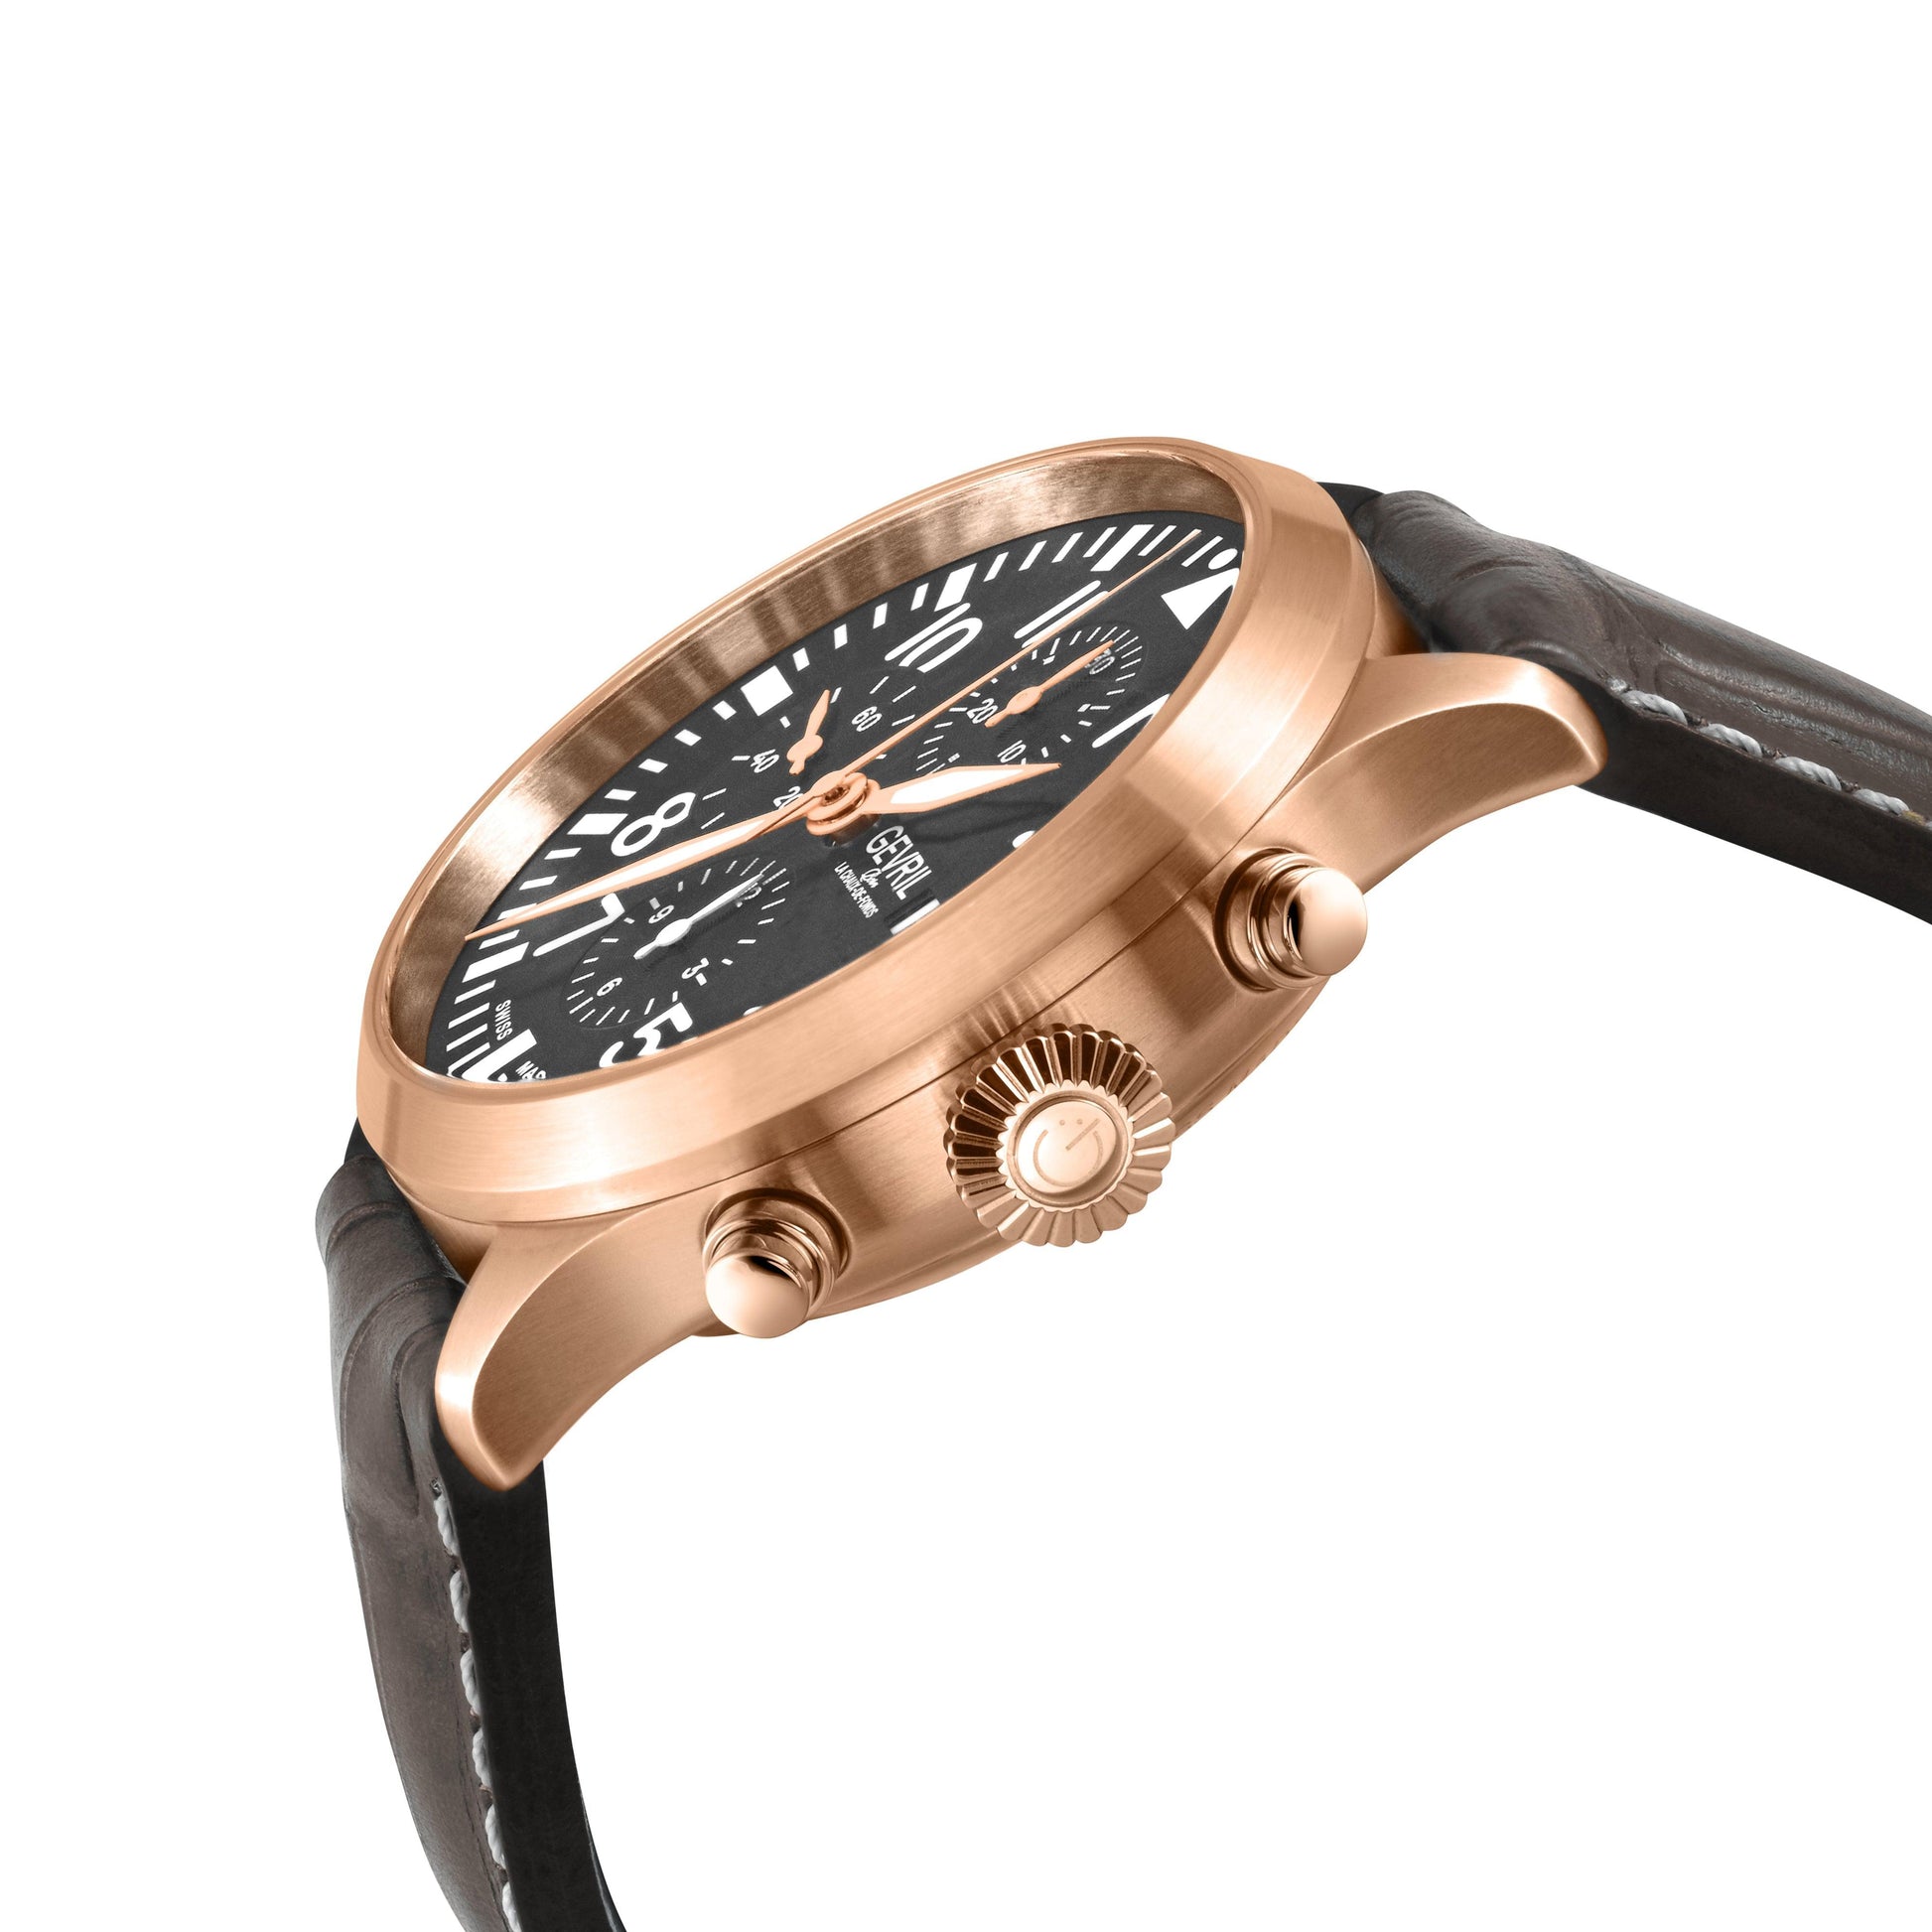 Gevril-Luxury-Swiss-Watches-Gevril Vaughn Chronograph - Pilot-47103-1